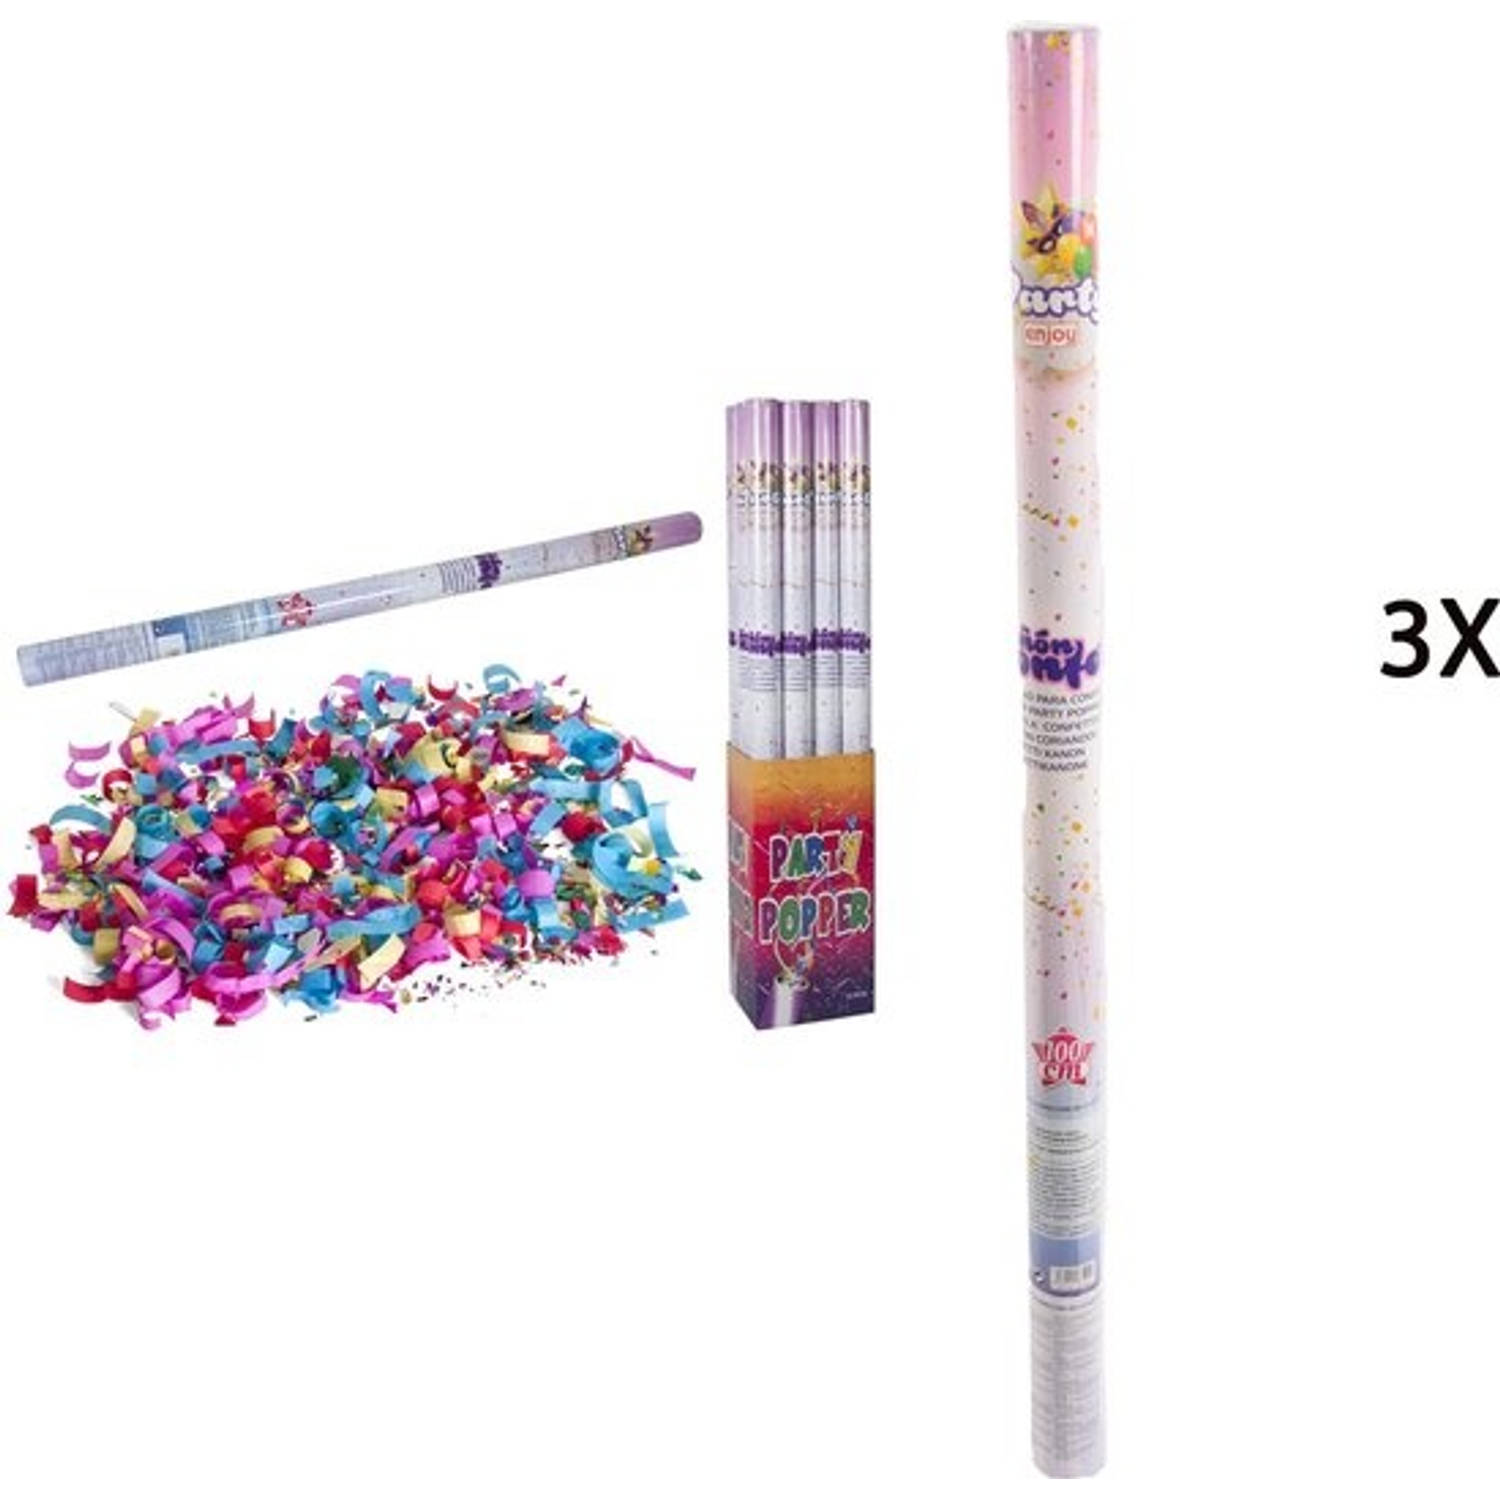 Discountershop party popper - 3x Party confetti shooter 100 cm - party popper confetti kanon